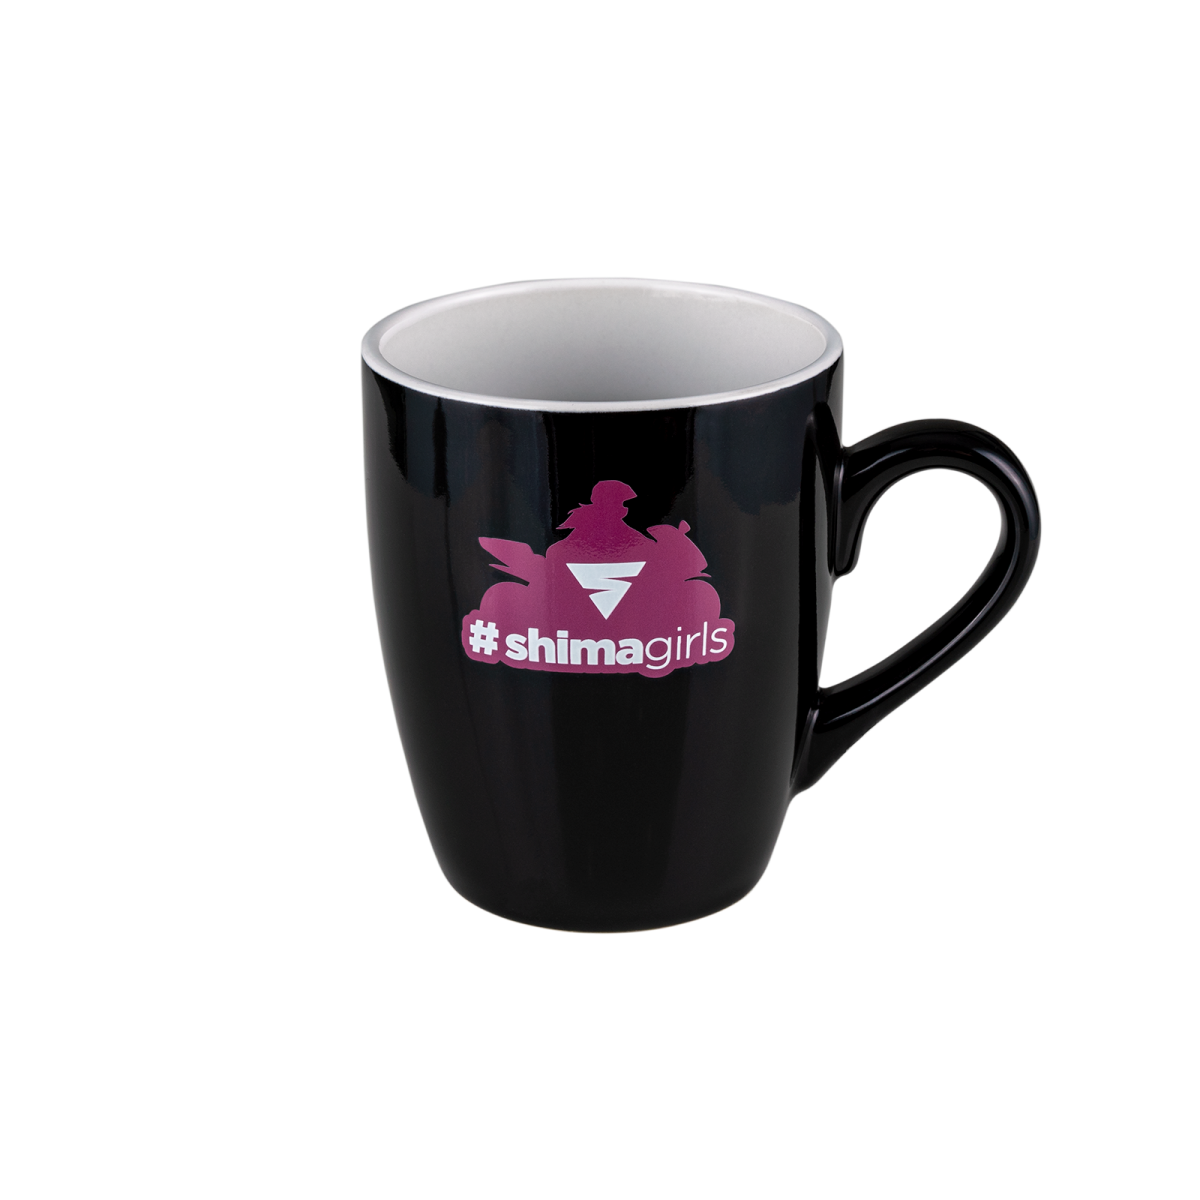 A black mug with #shimagirls logo